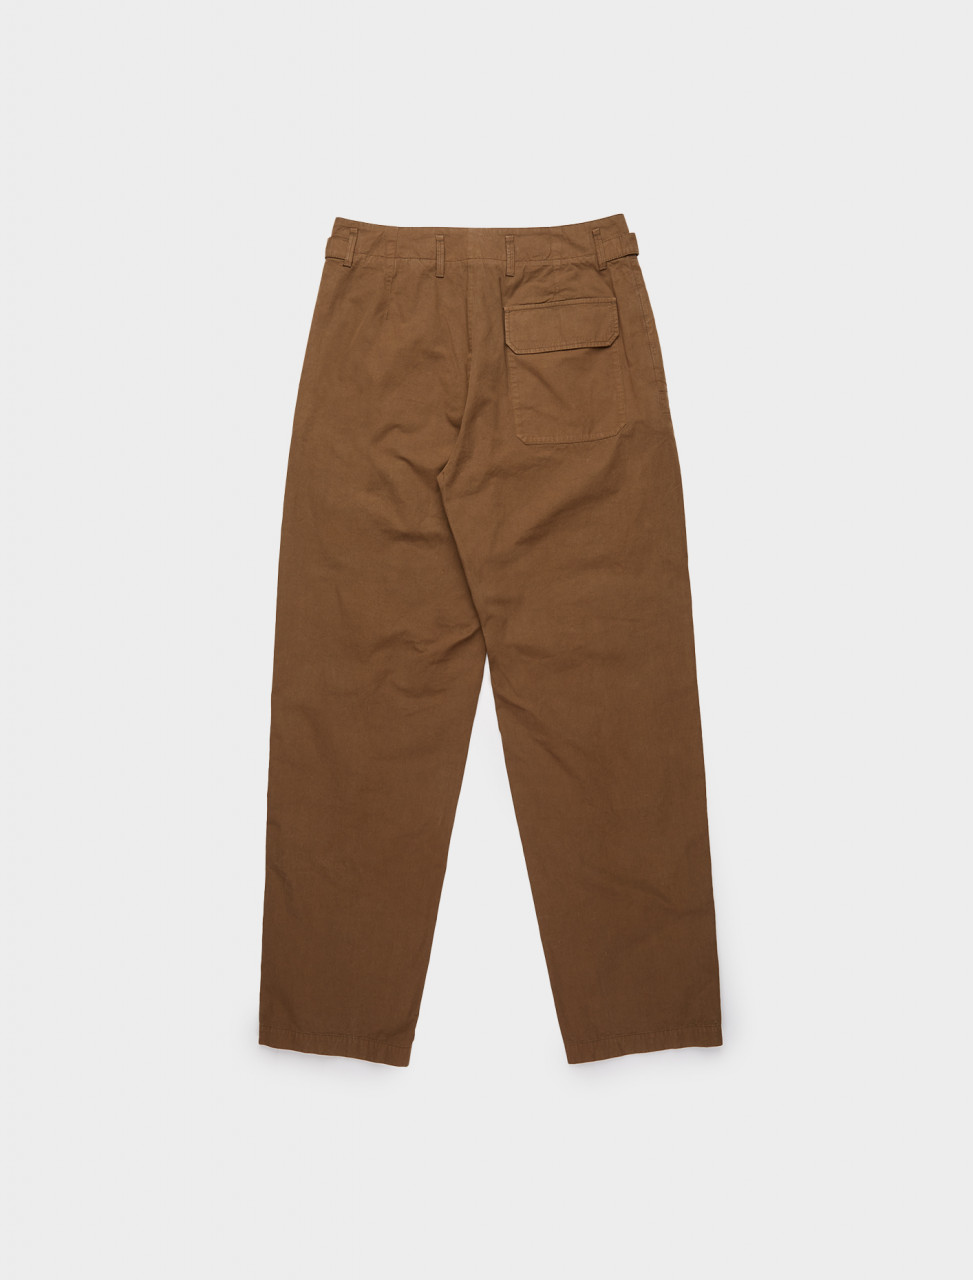 Lemaire Military Trouser in Dark Brown | Voo Store Berlin | Worldwide ...